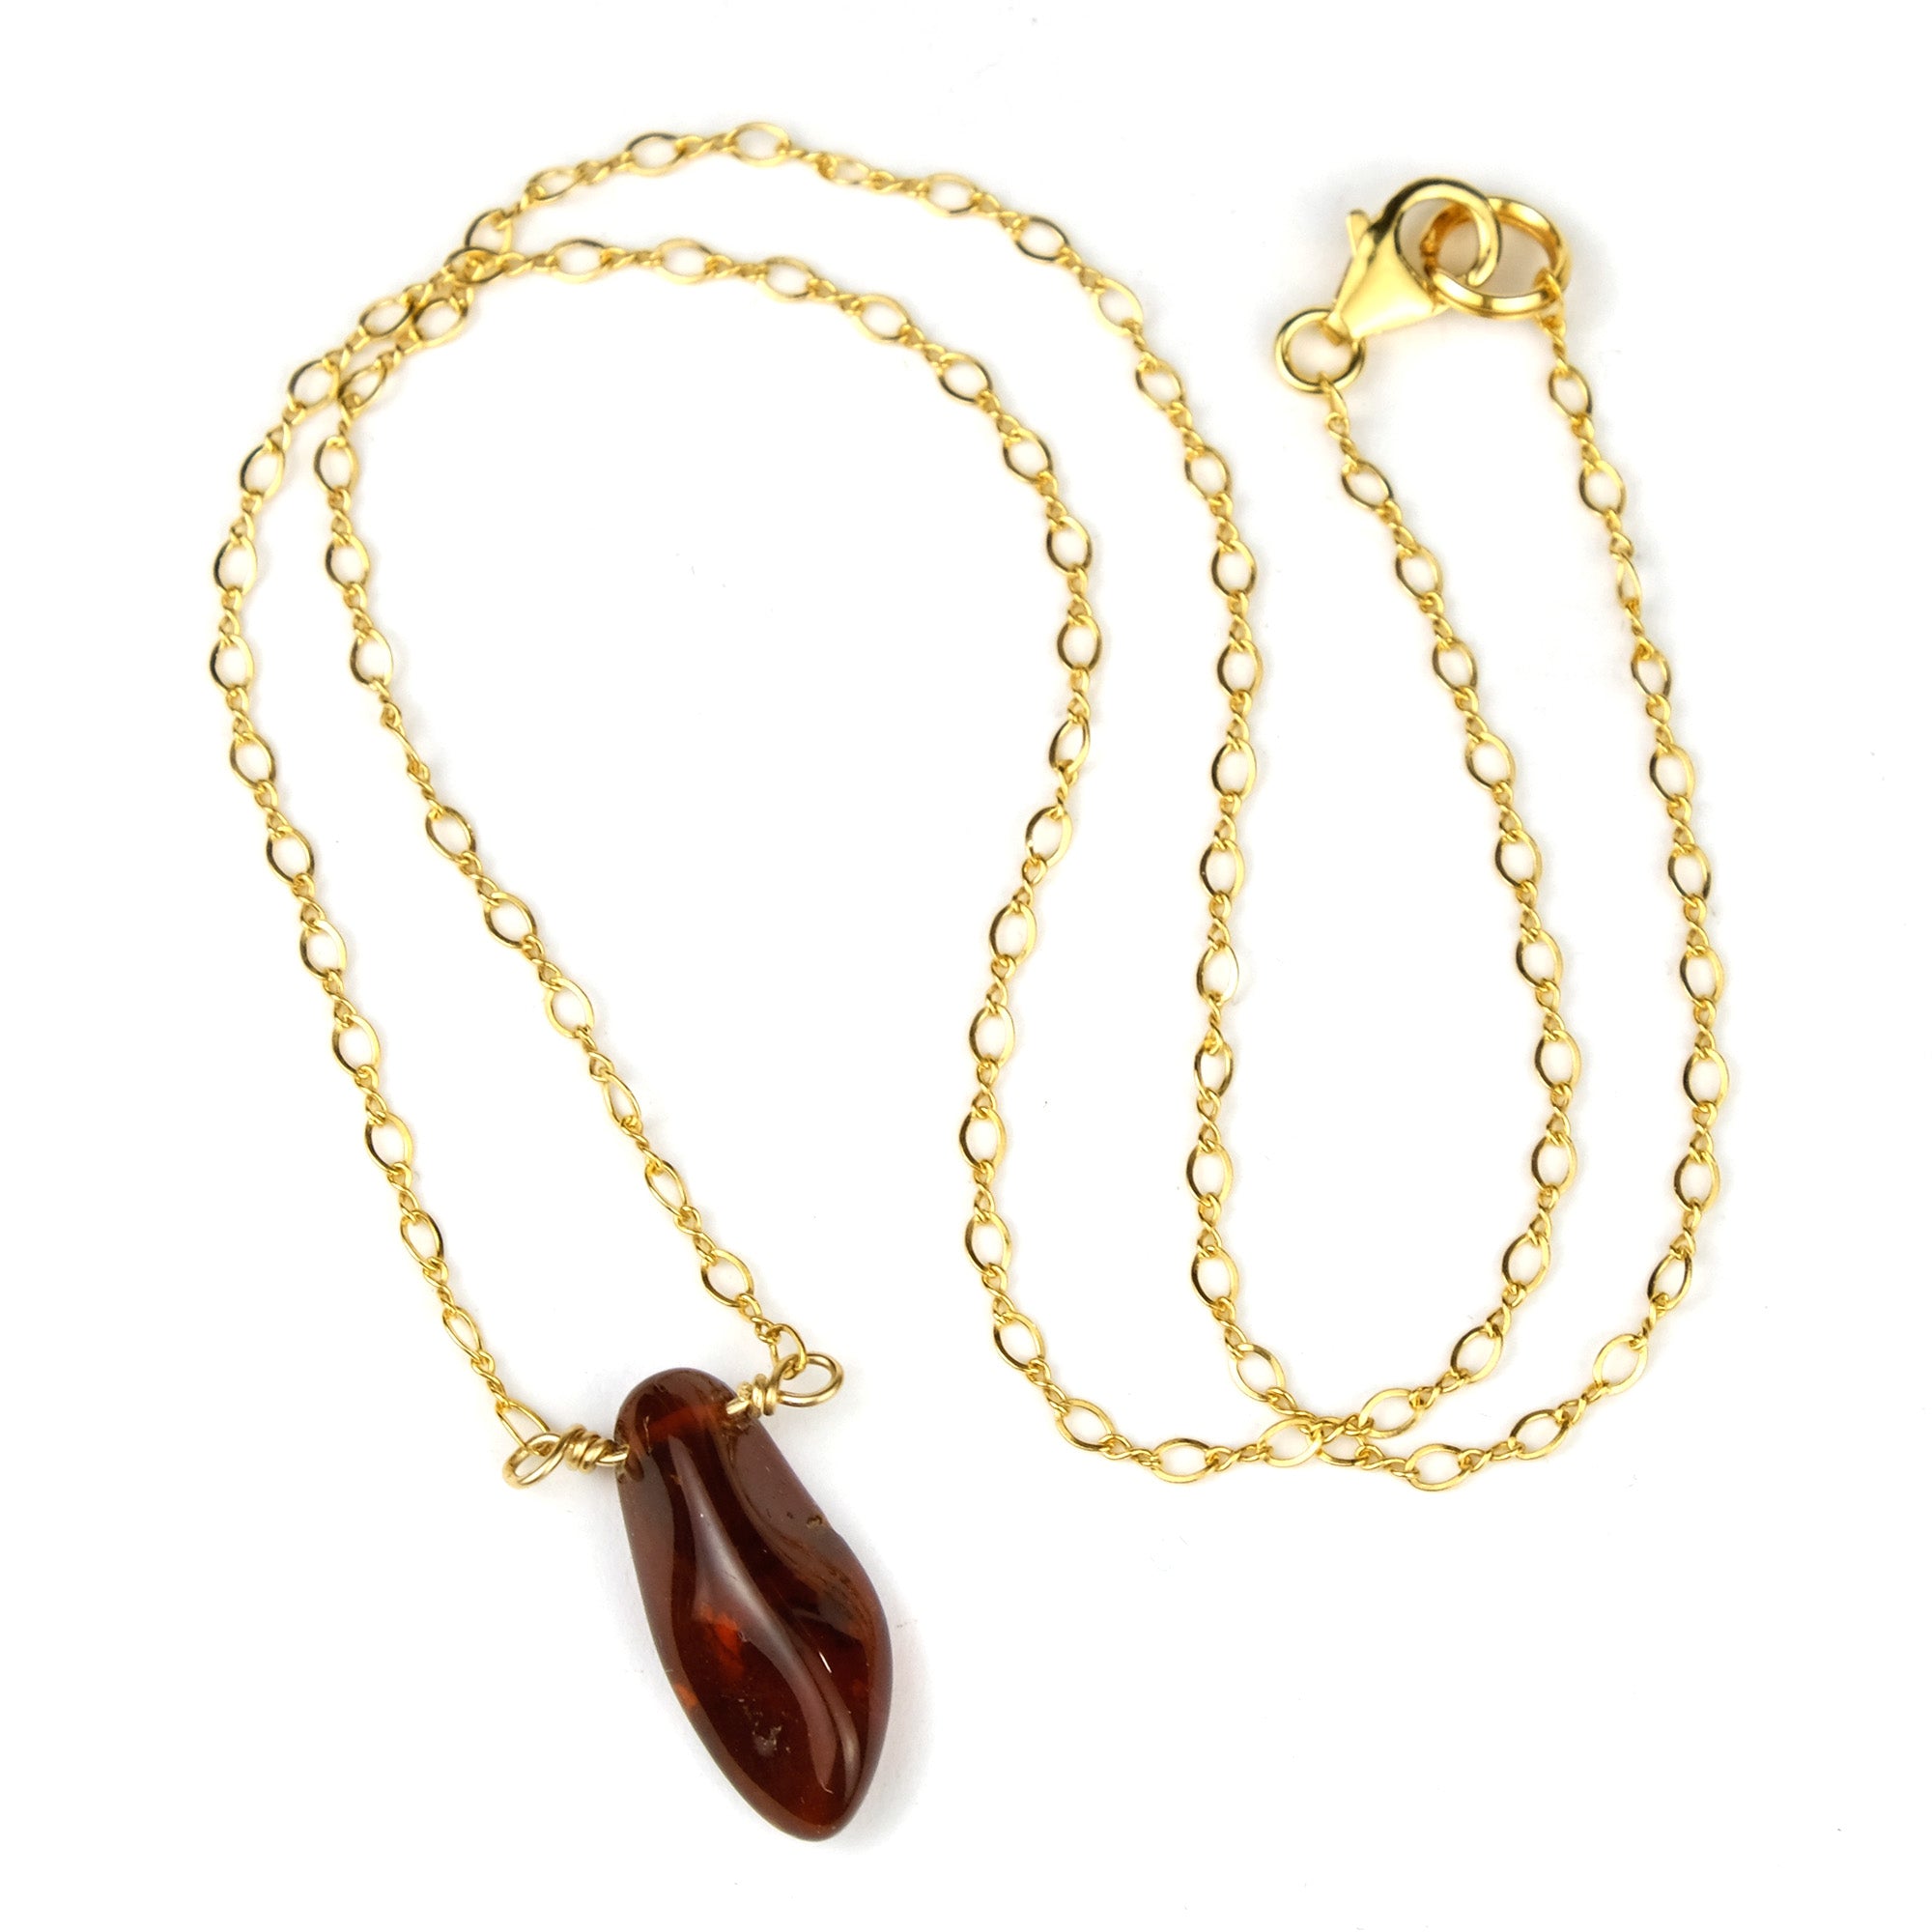 Natural Stone Lock Pendant Necklace For Women Men Healing Crystals Padlock  Necklaces Opal Quartz Fashion Jewelry